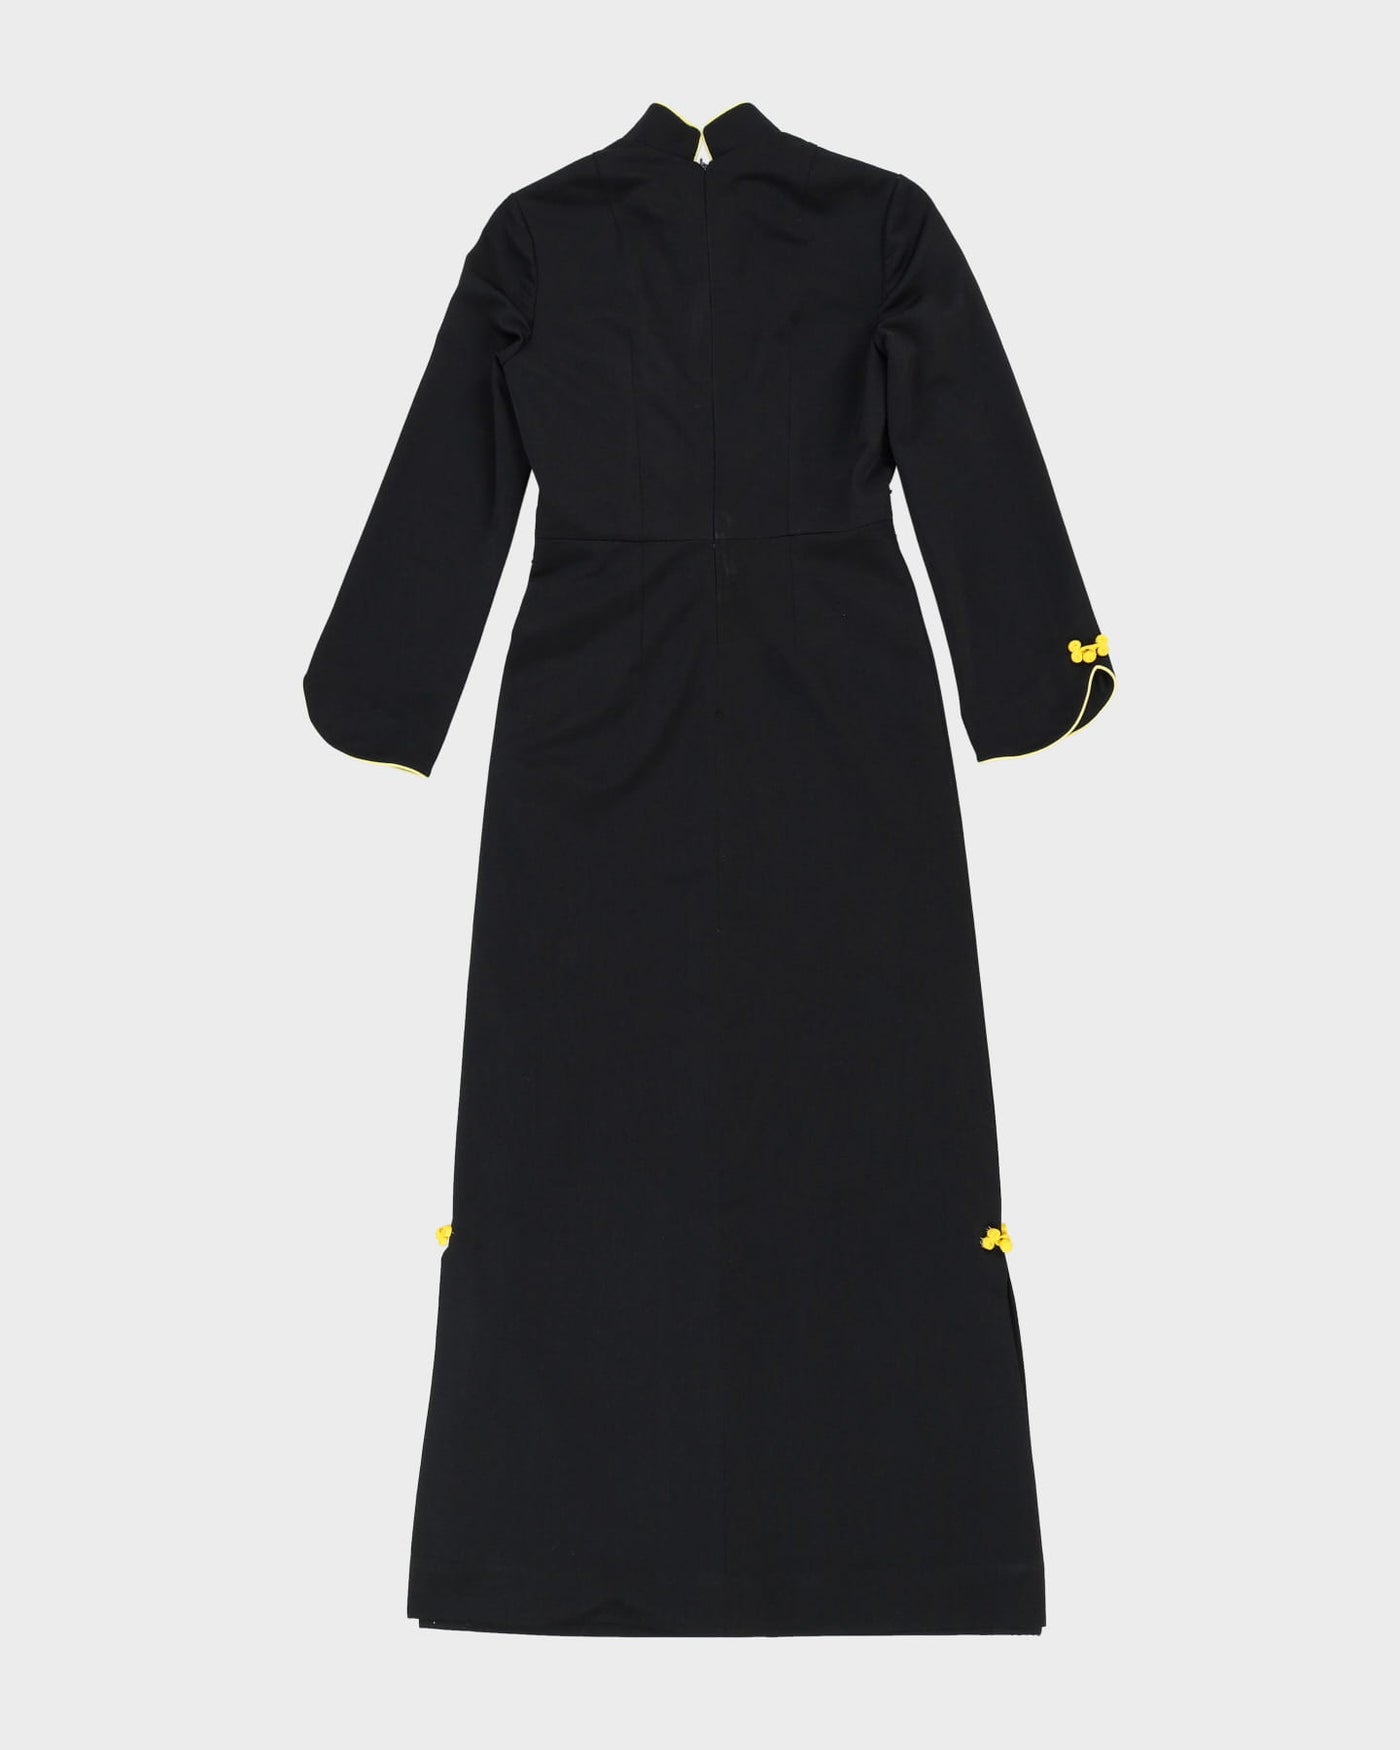 1990s Black And Yellow Cheongsam Style Dress - XXS